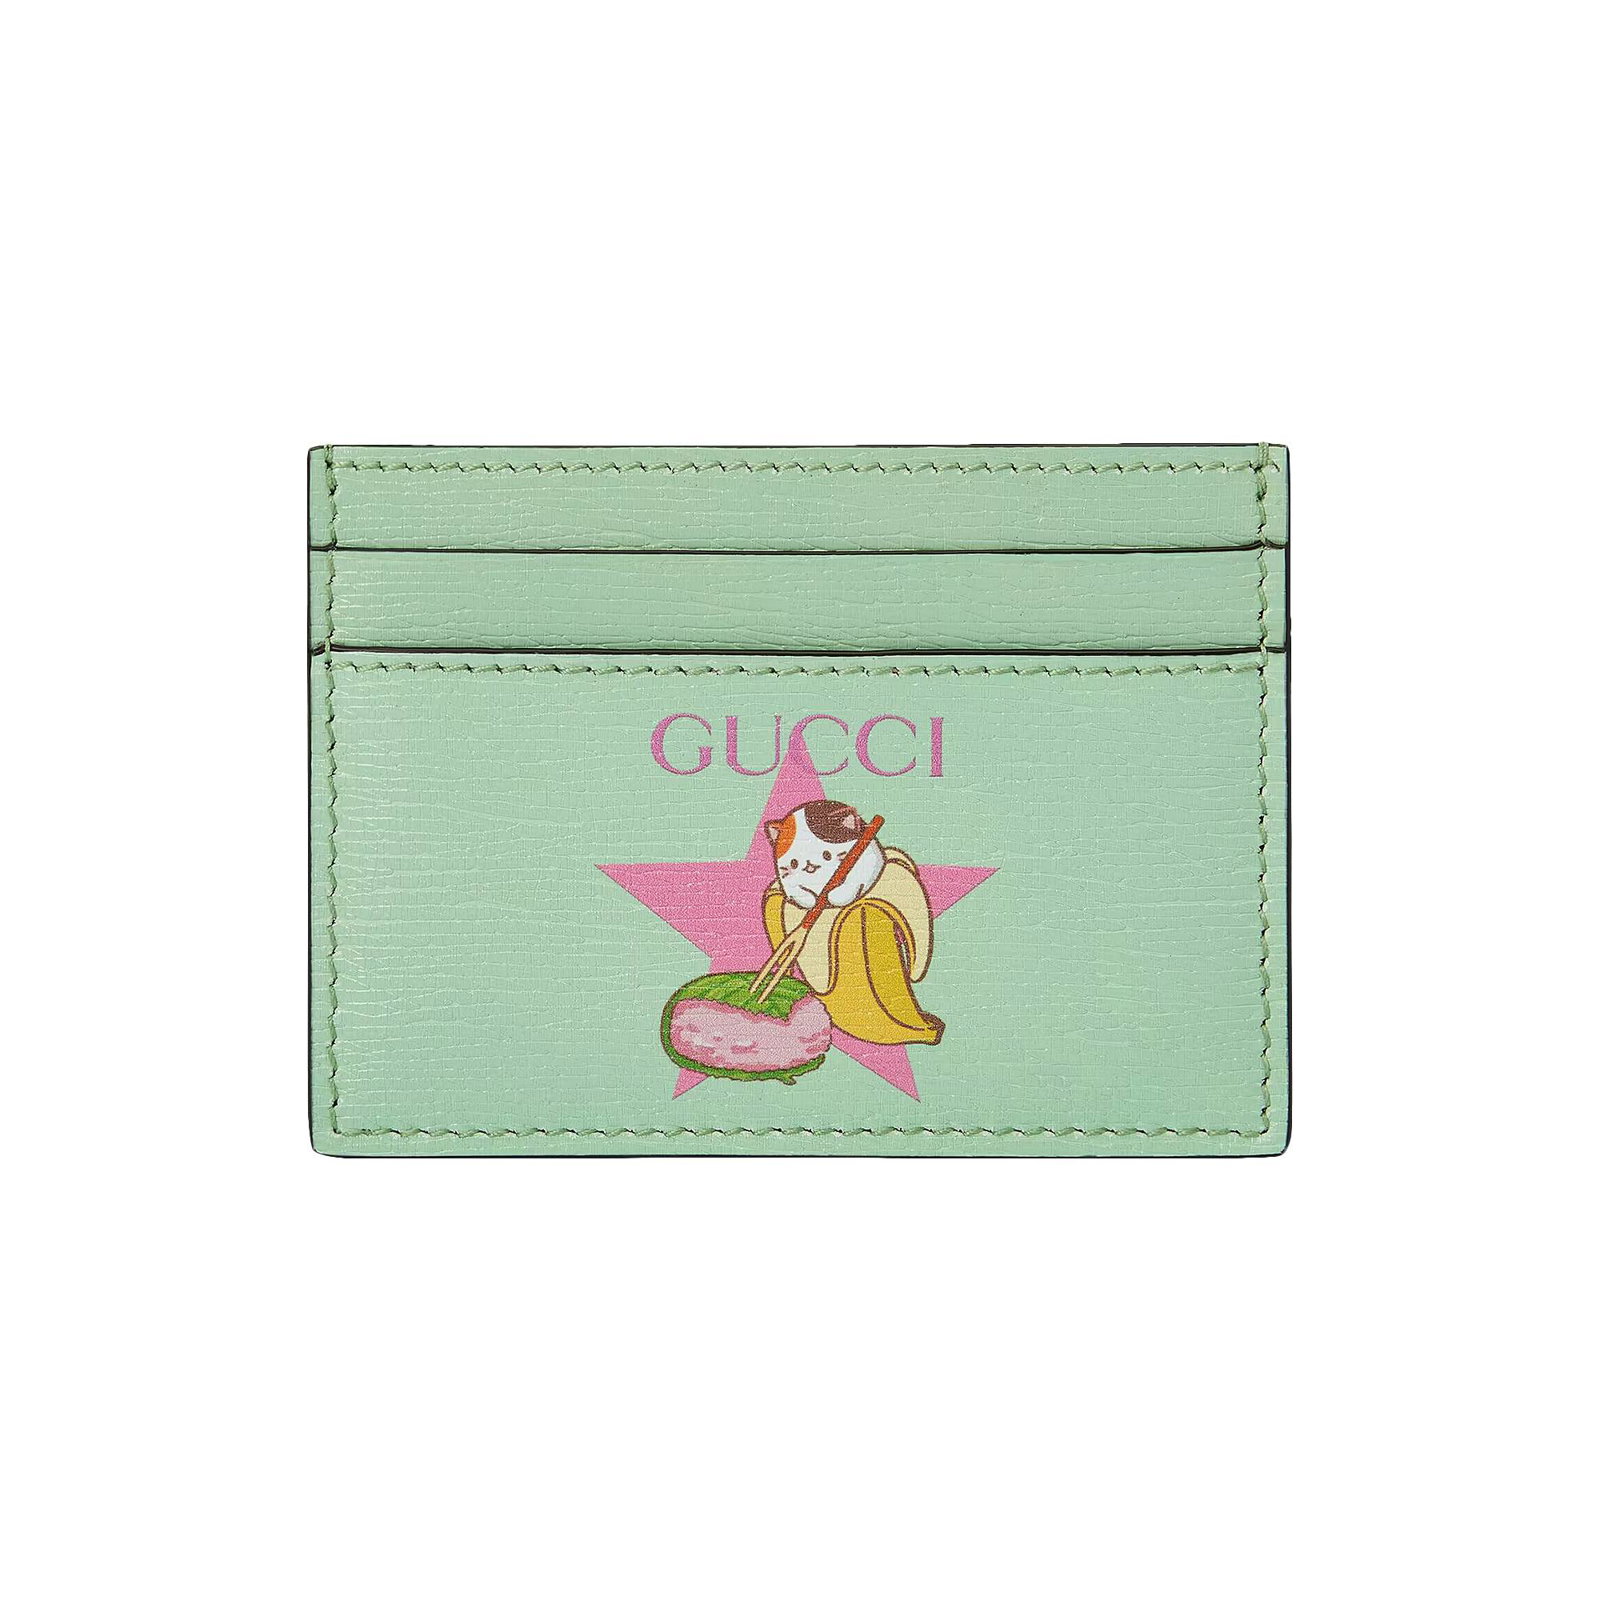 Vintage Gucci Guccissima Flip Open Card Case/Cardholder Wallet Logo Italy